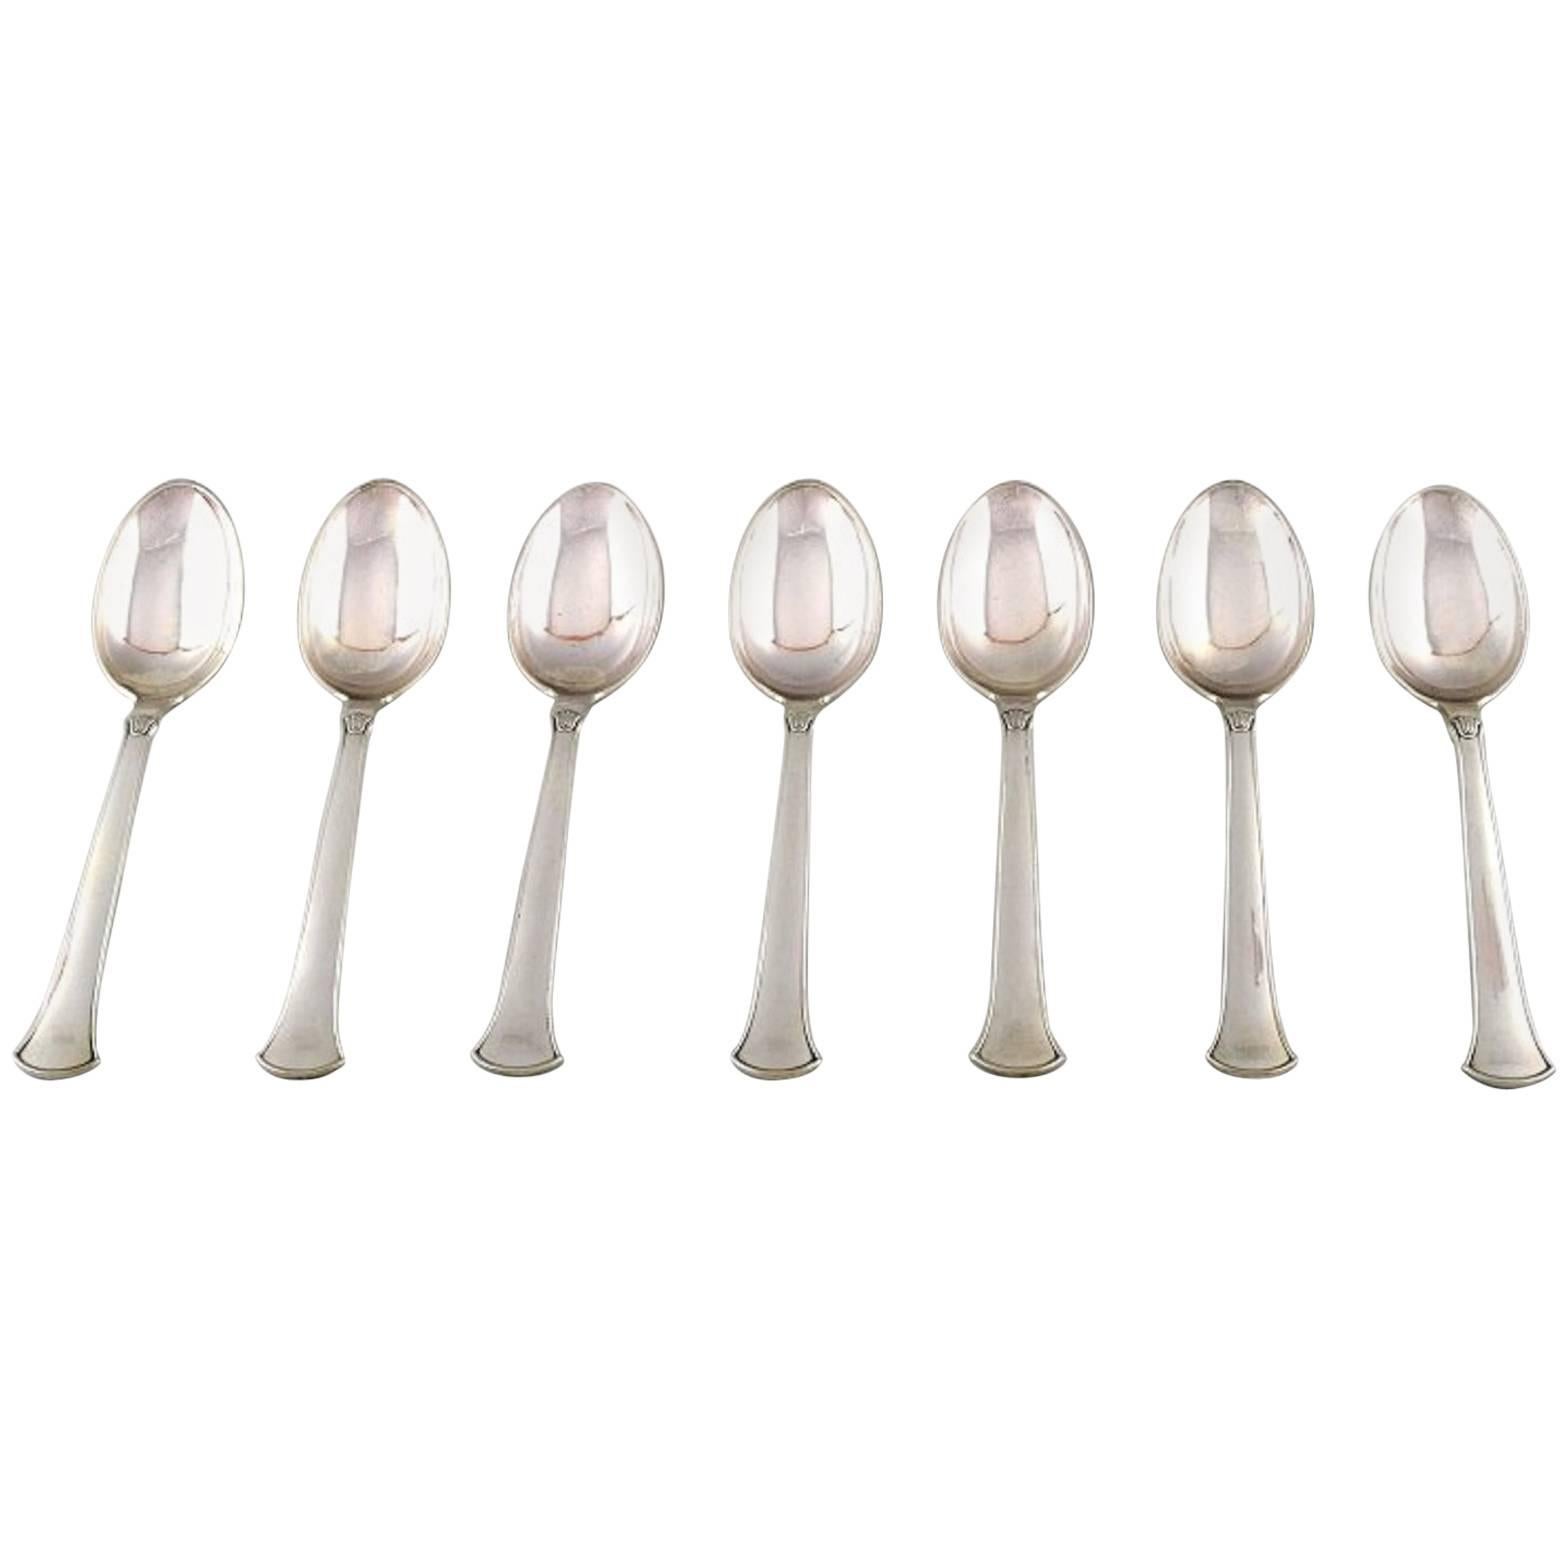 Hans Hansen Silverware Number 5 in Sterling Silver, Seven Tea Spoons